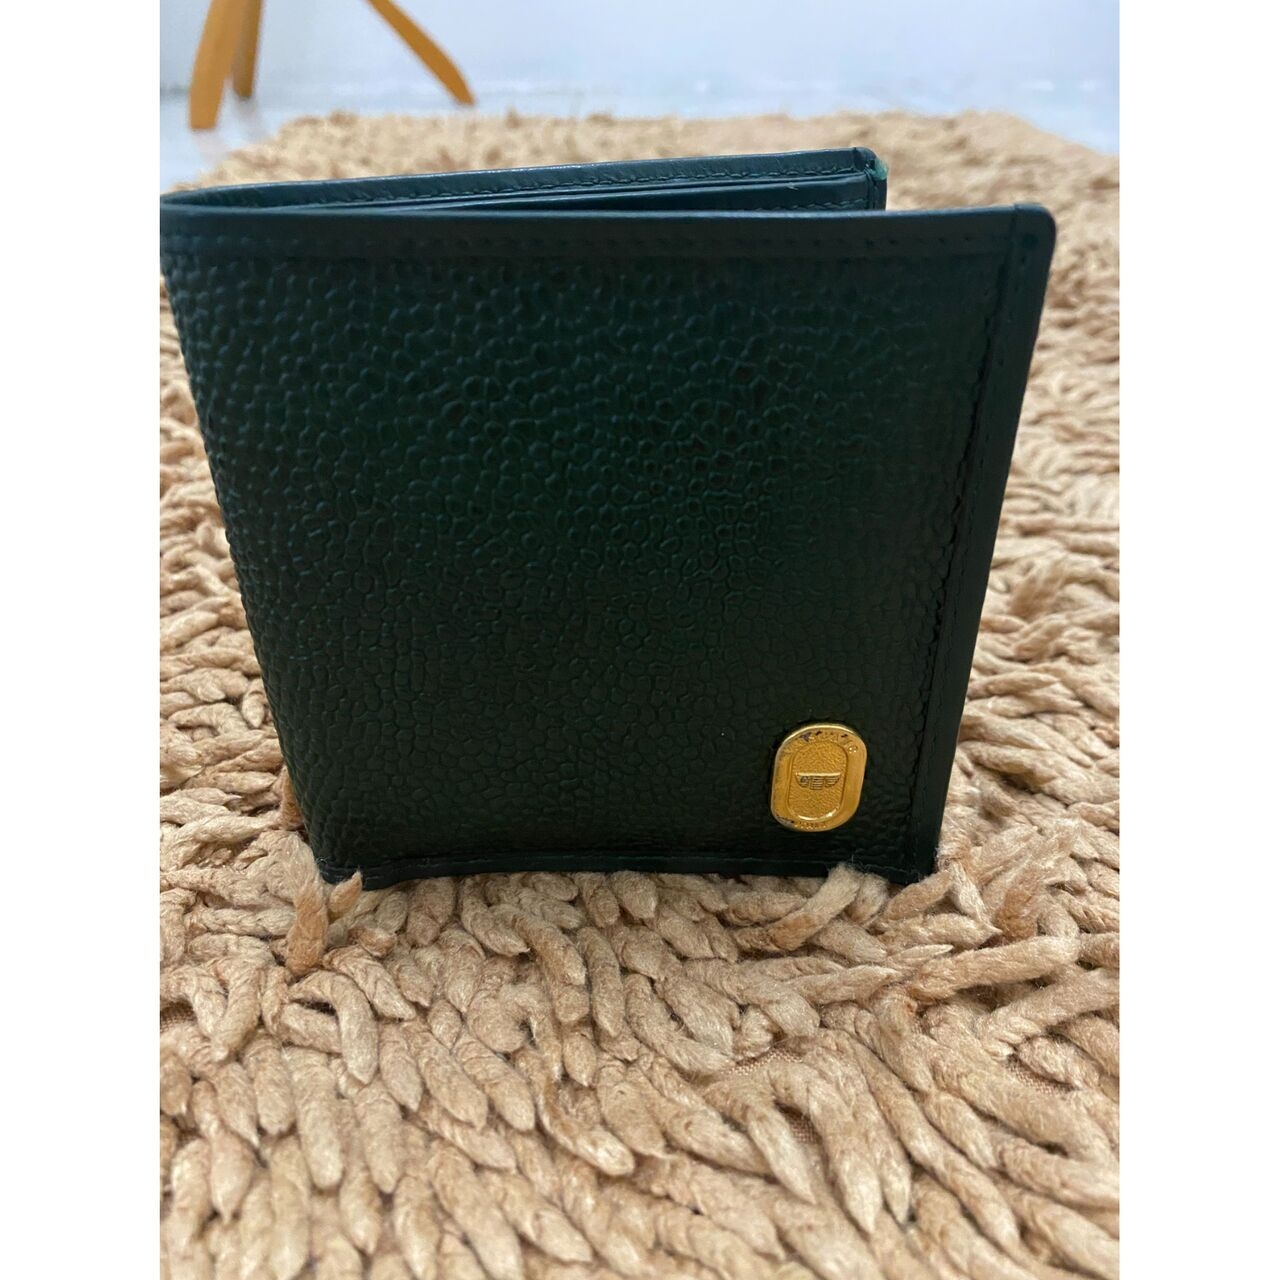 Toscano Green Wallet